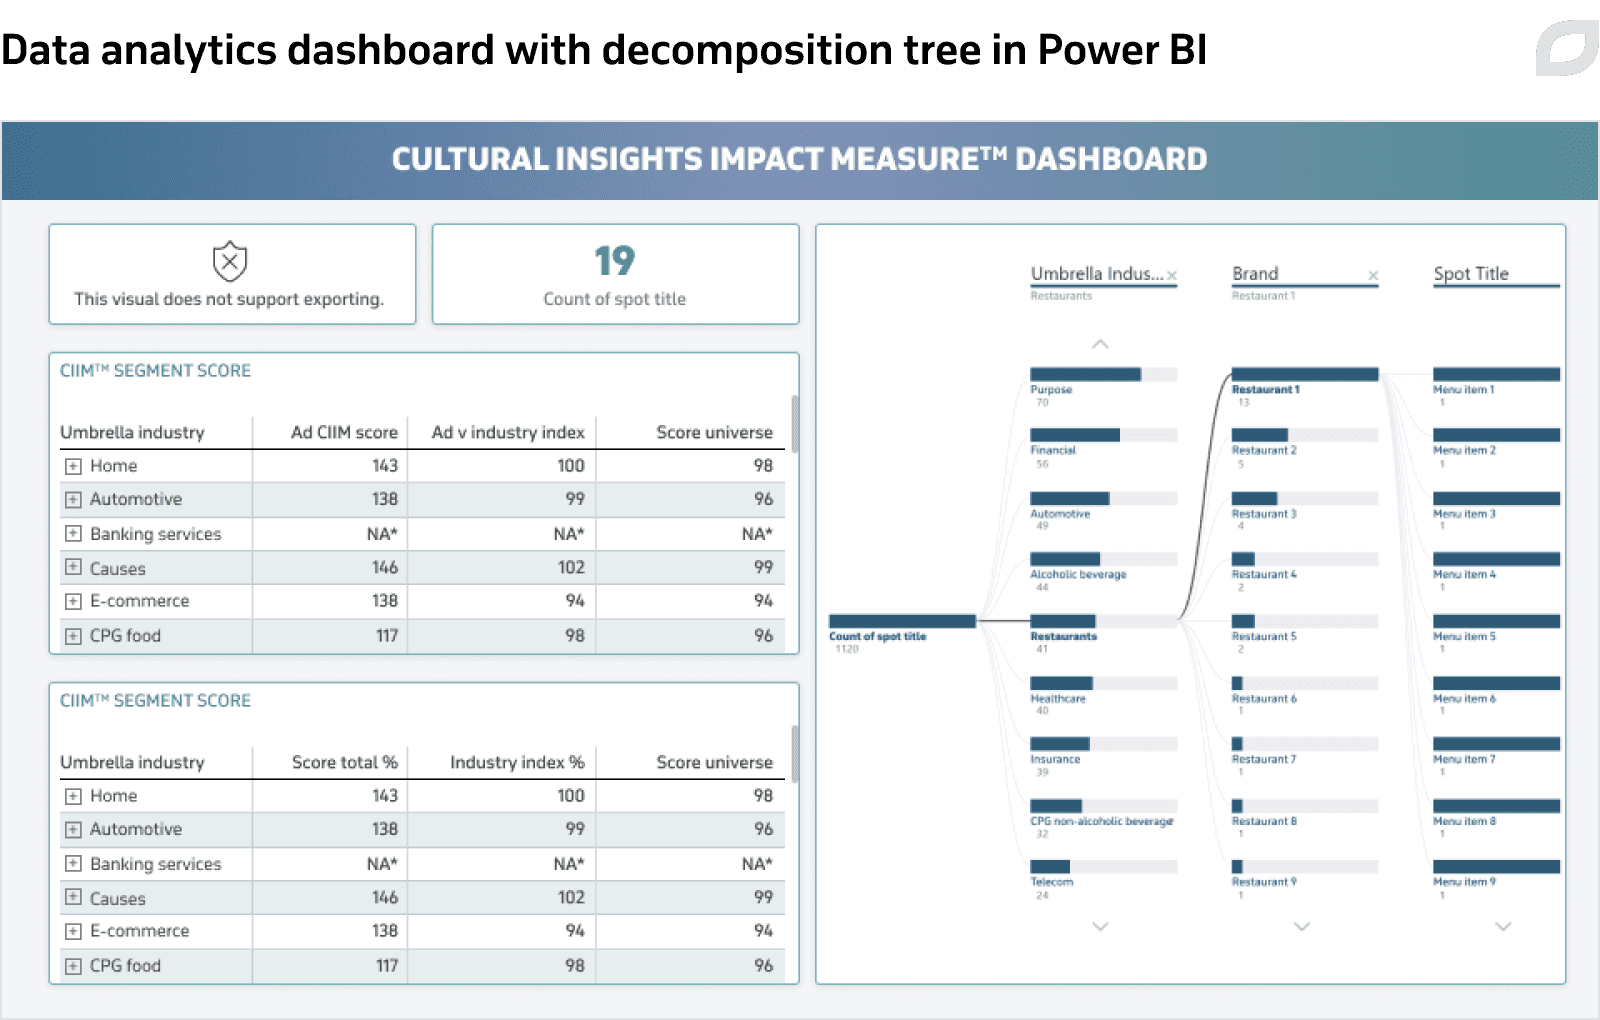 Data analytics dashboard with decomposition tree in Power BI